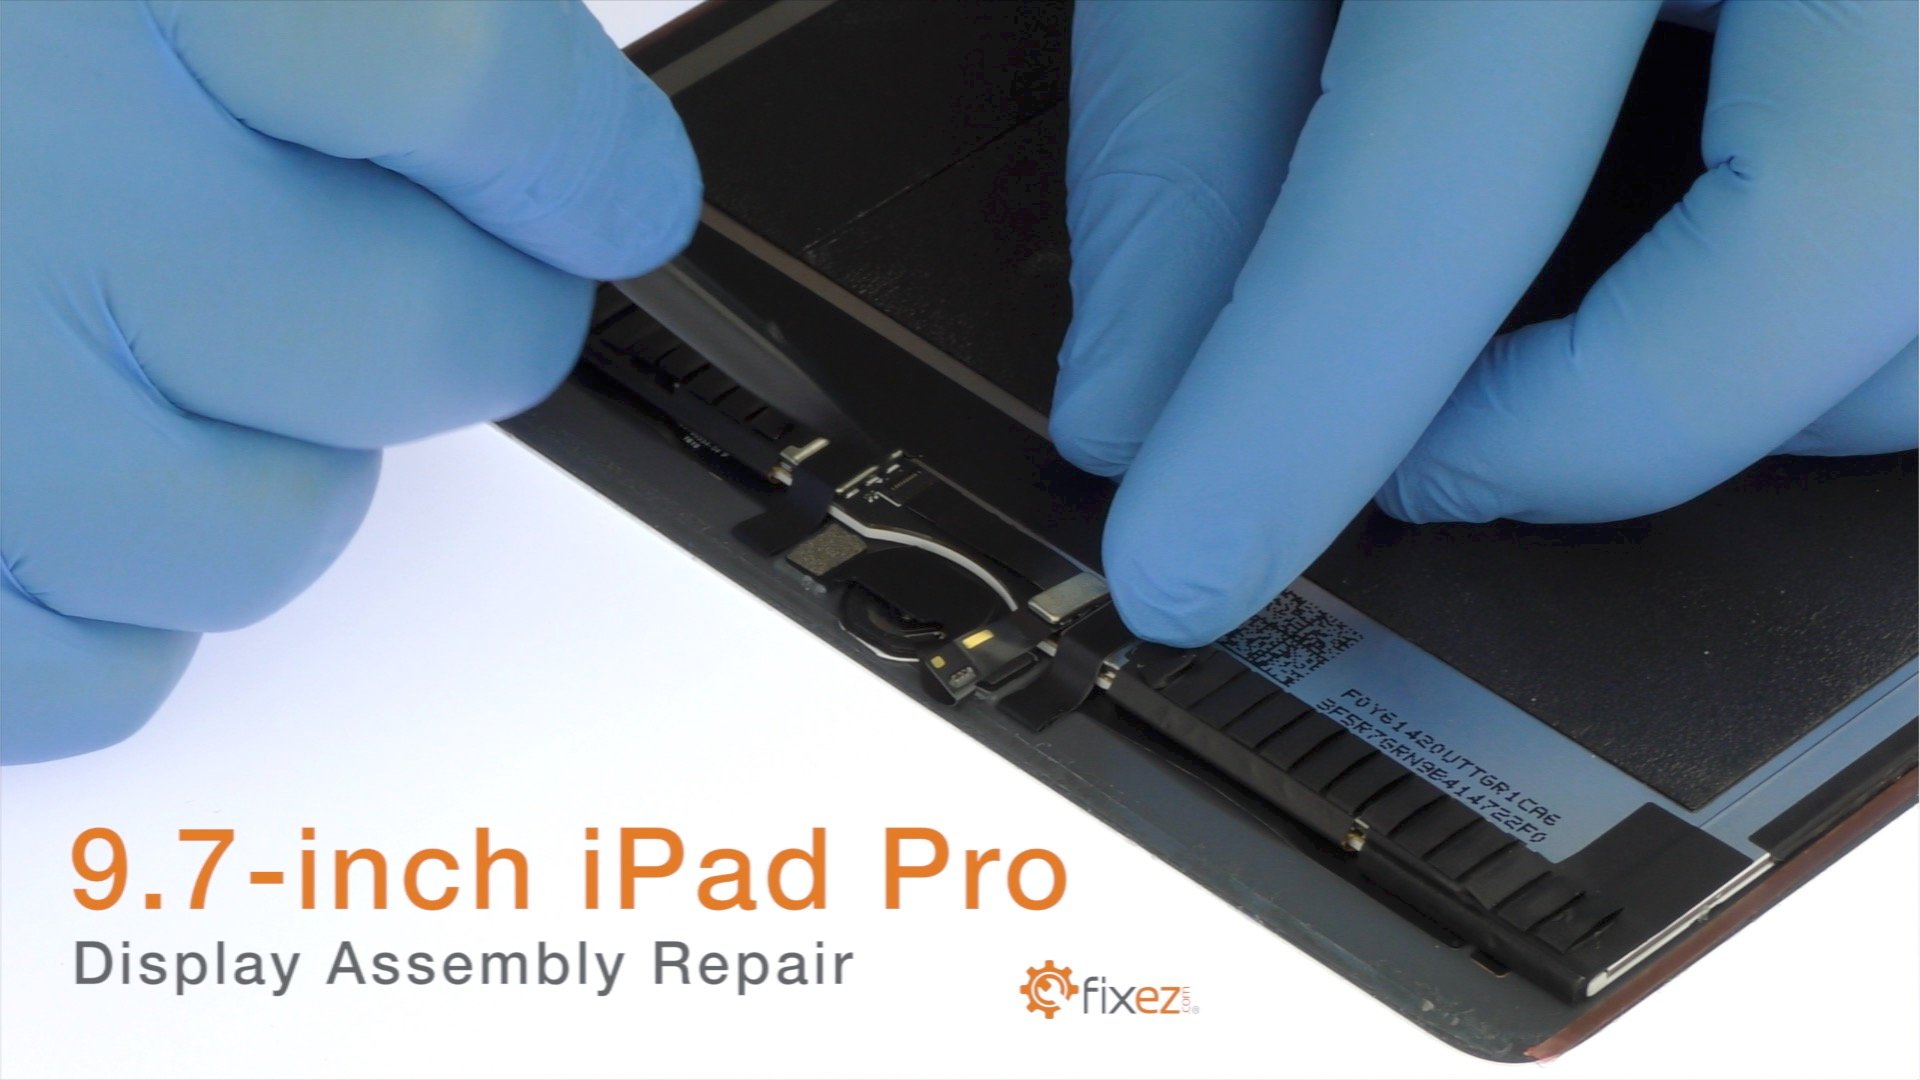 iPad Pro 9.7" Display Assembly Repair